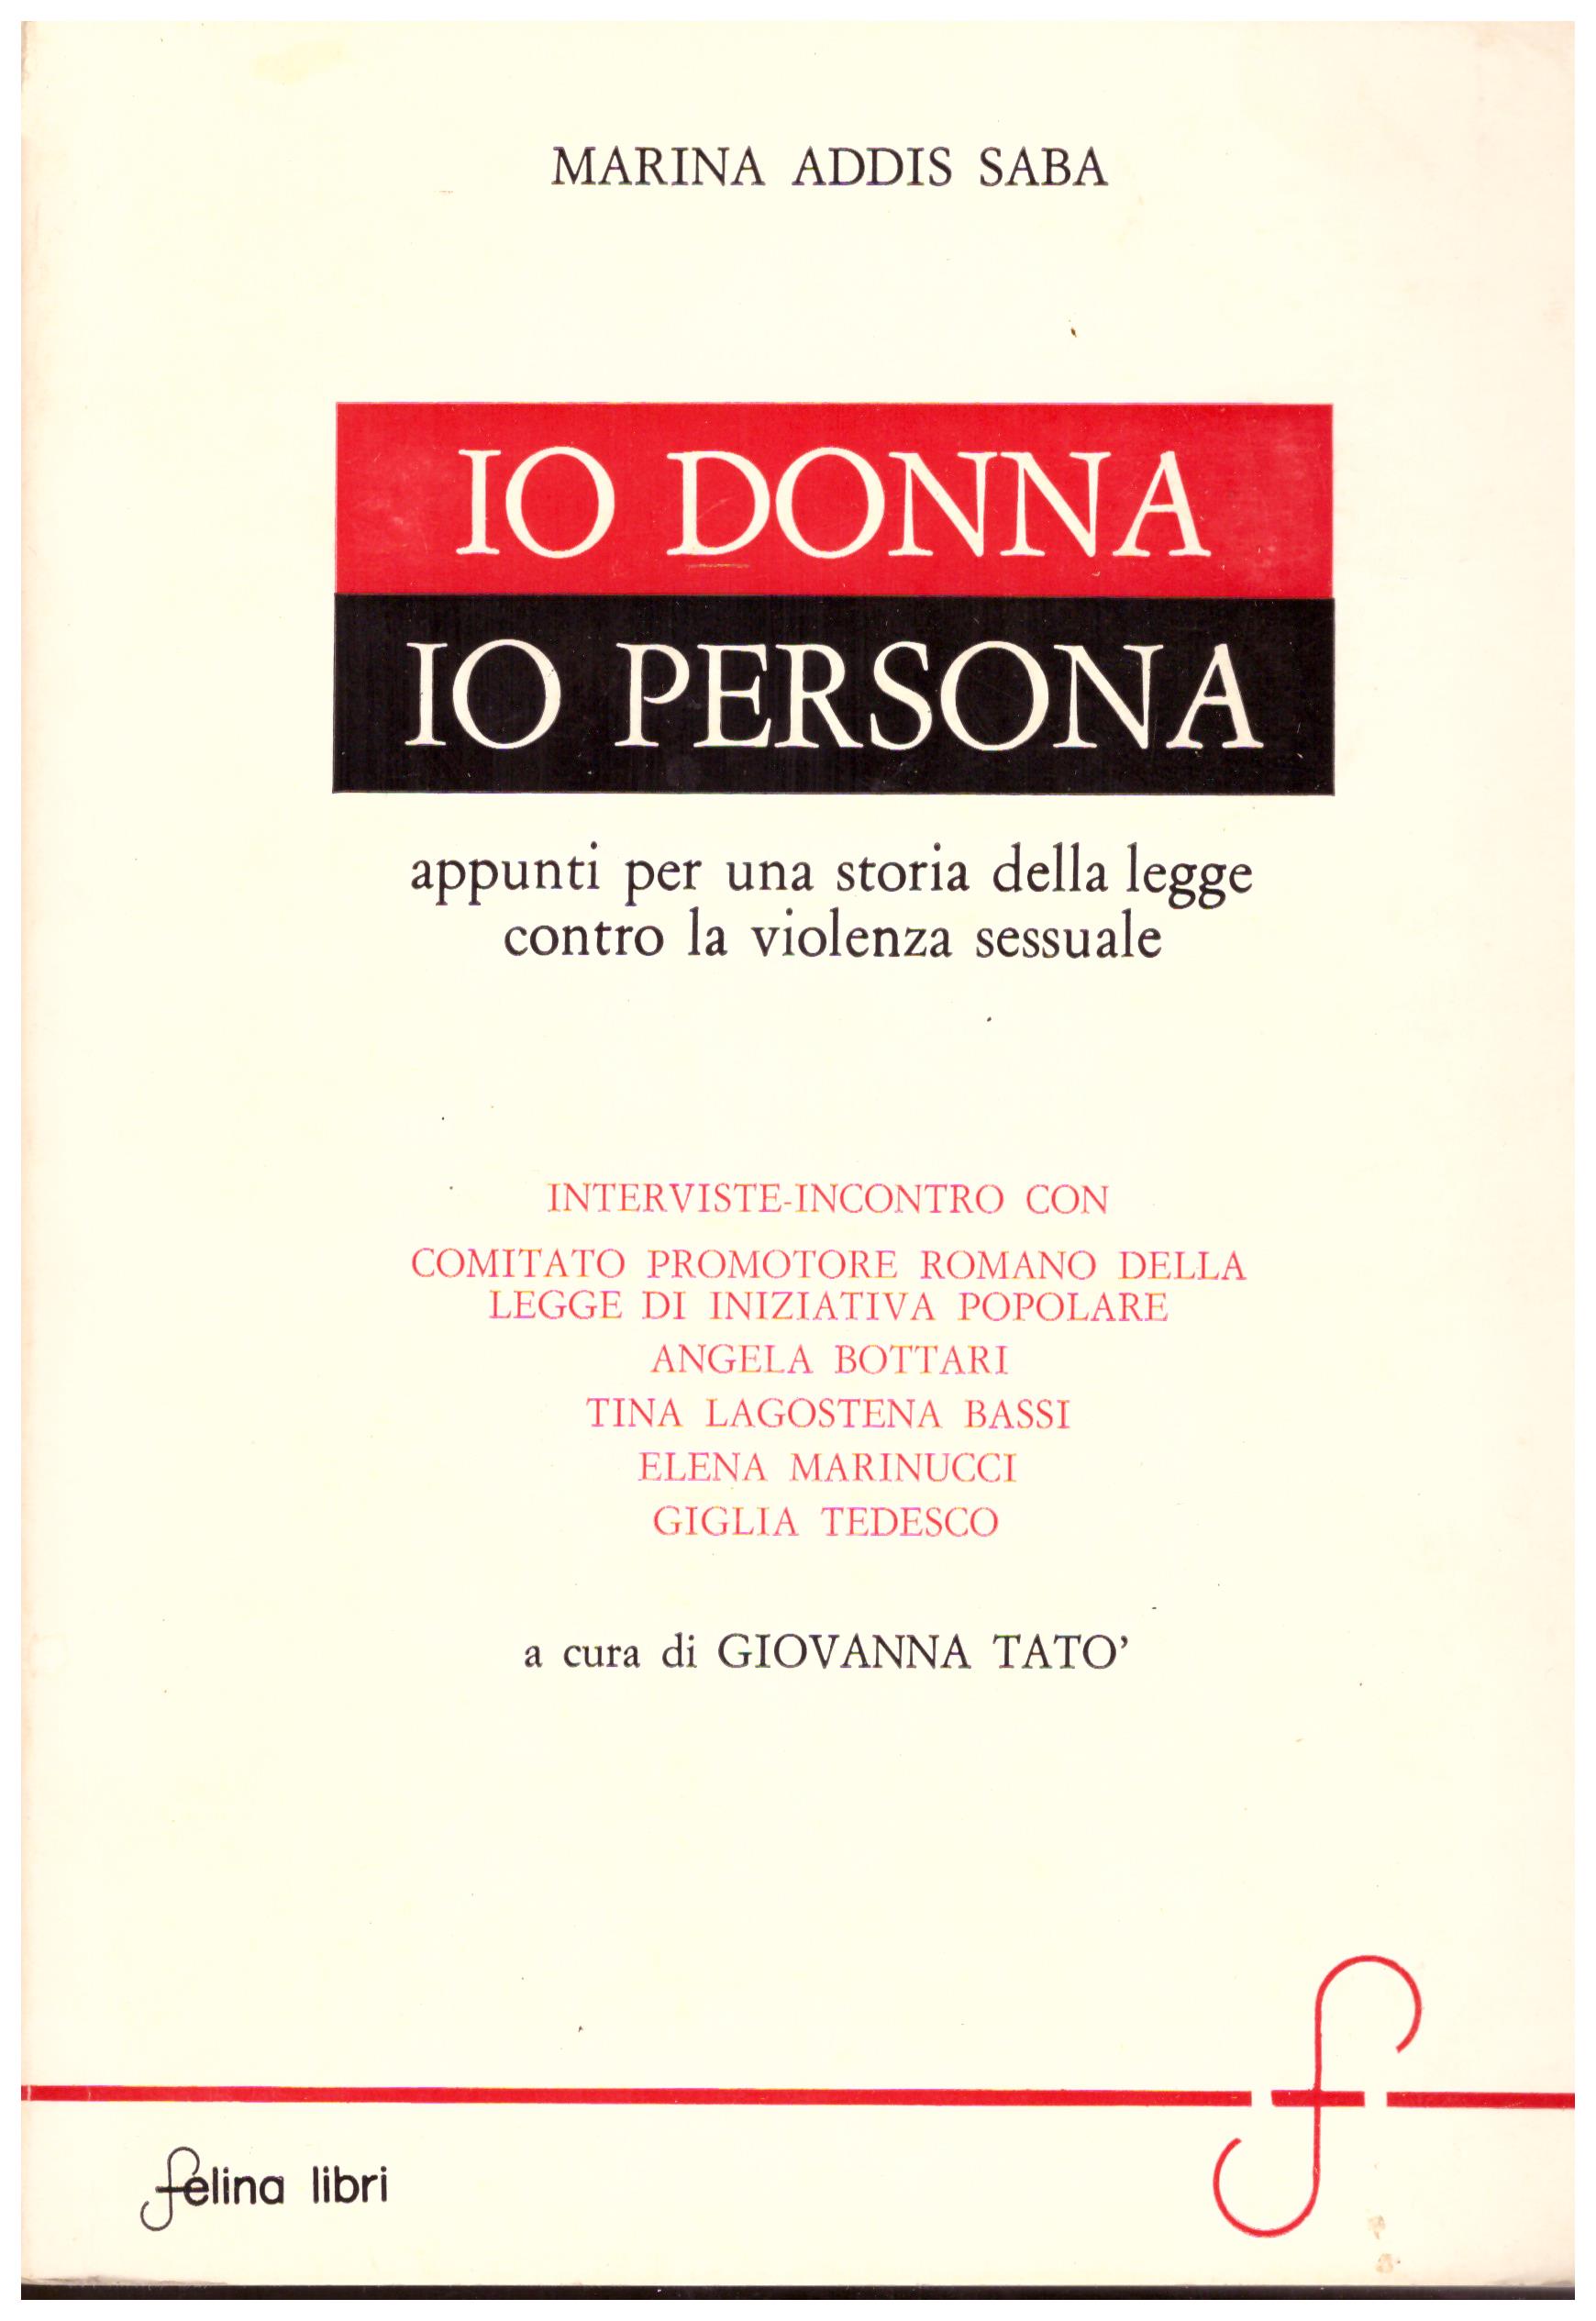 Titolo: Io donna io persona    Autore: Marina Addis Saba    Editore: felina libri, Roma 1985